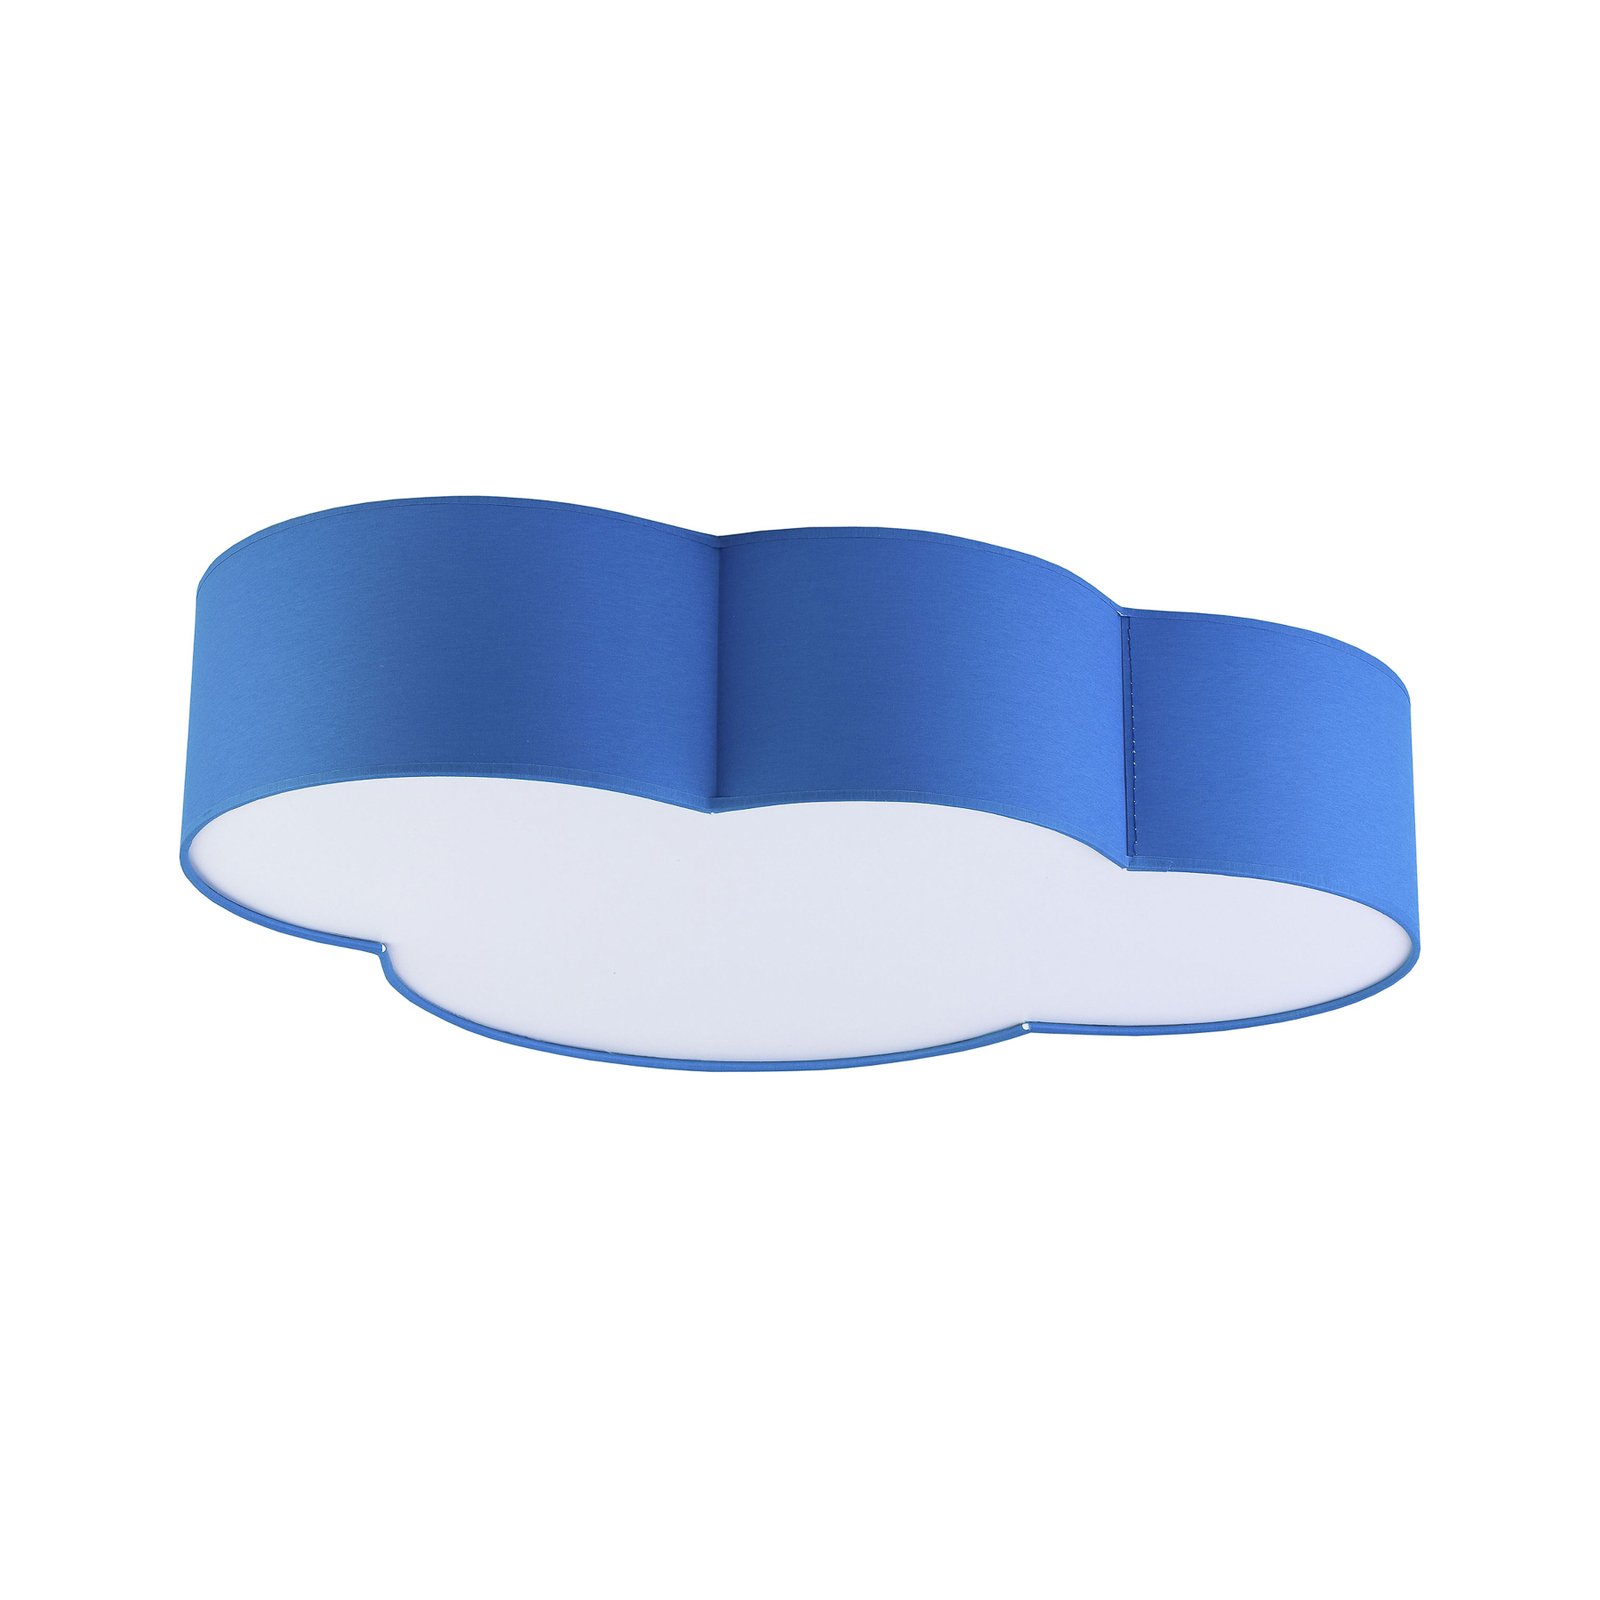 Deckenleuchte Cloud, Textil, 62 x 45 cm, blau